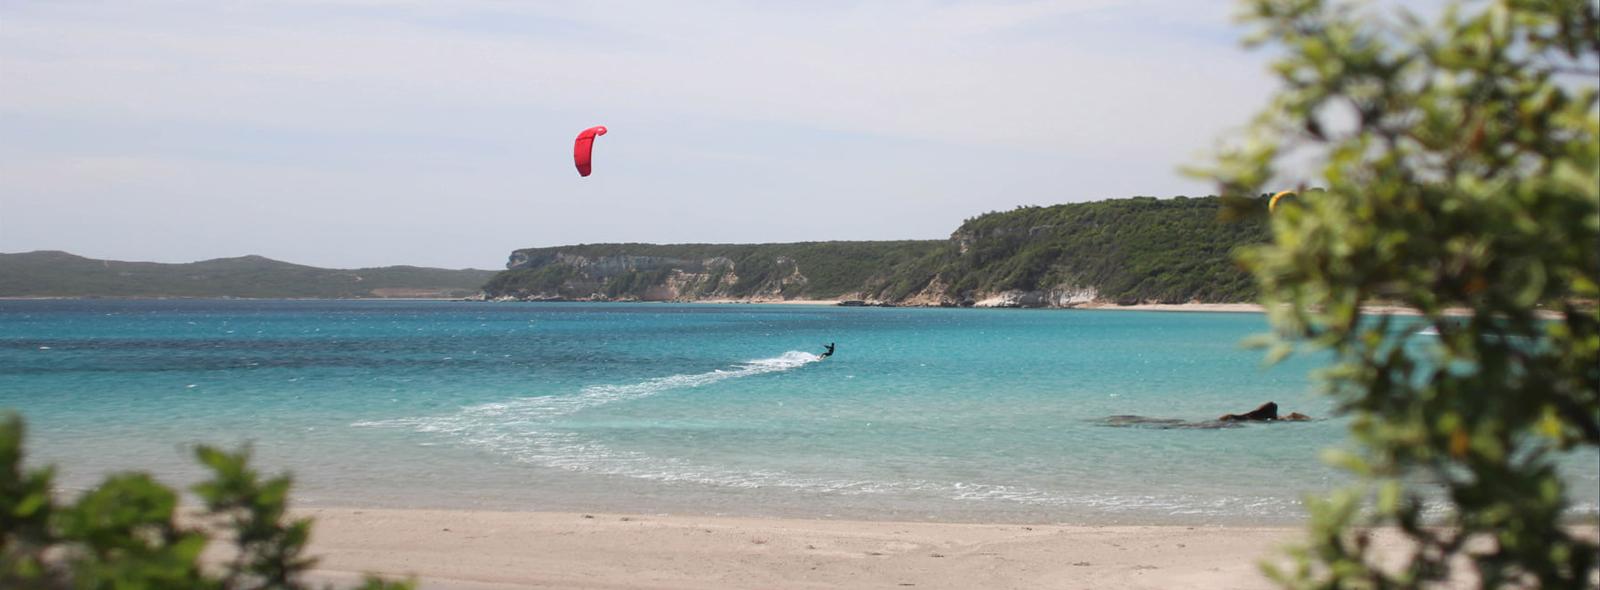 Bienenue au centre de kitesurf Nustrale Ride sur le spot de Piantarella en Corse